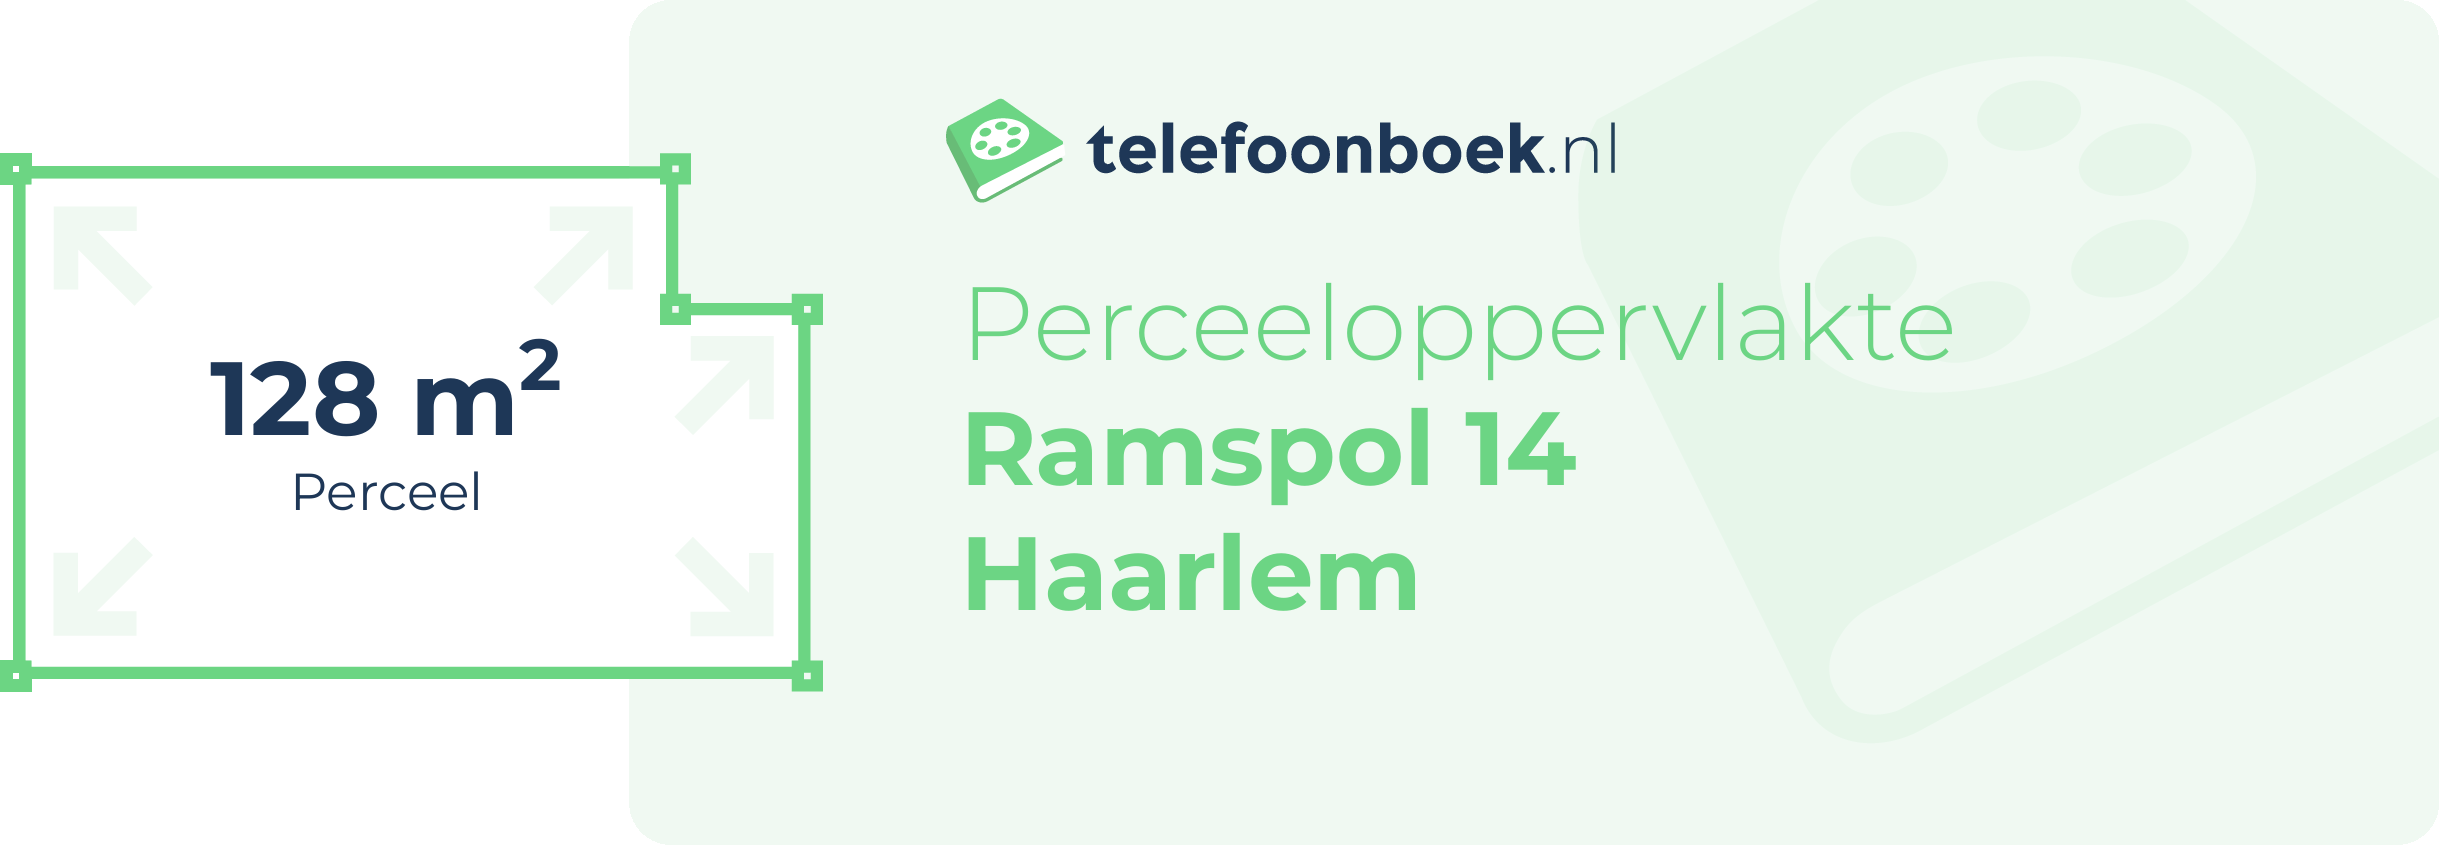 Perceeloppervlakte Ramspol 14 Haarlem